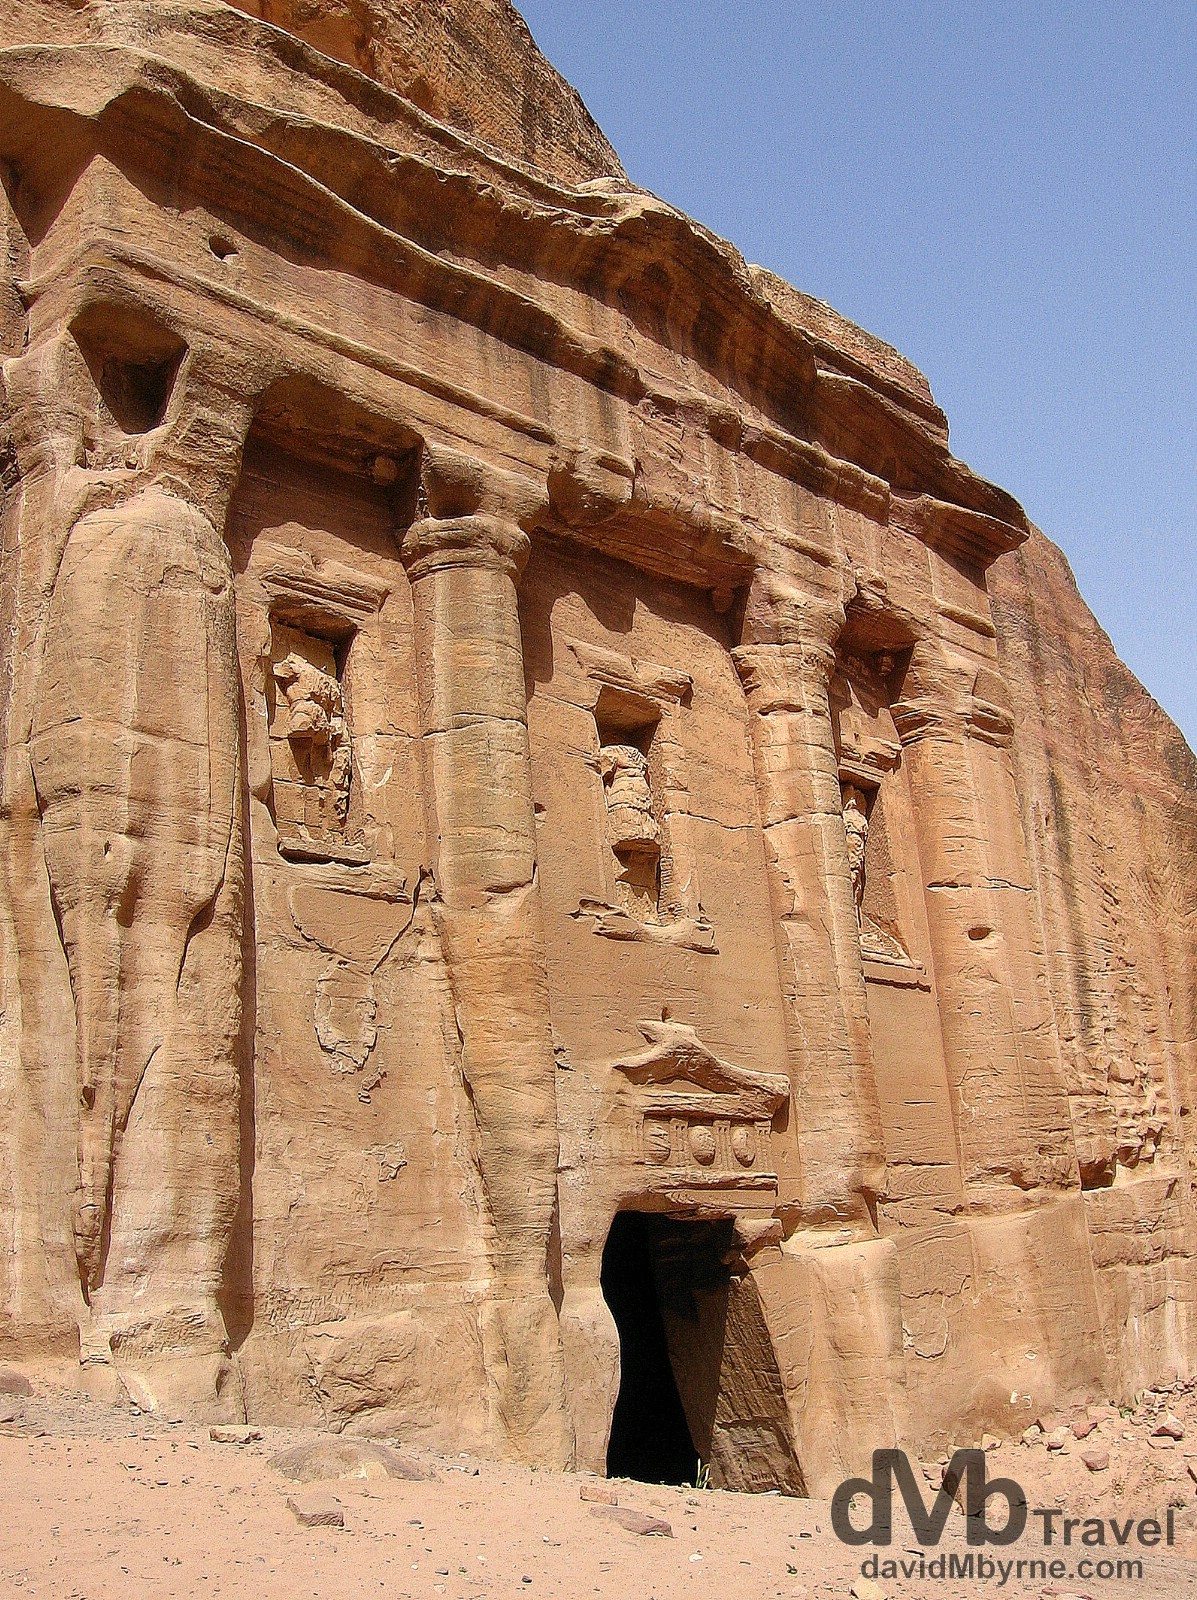 A weather-worn solid rock facade in Petra, Jordan. April 27, 2008.